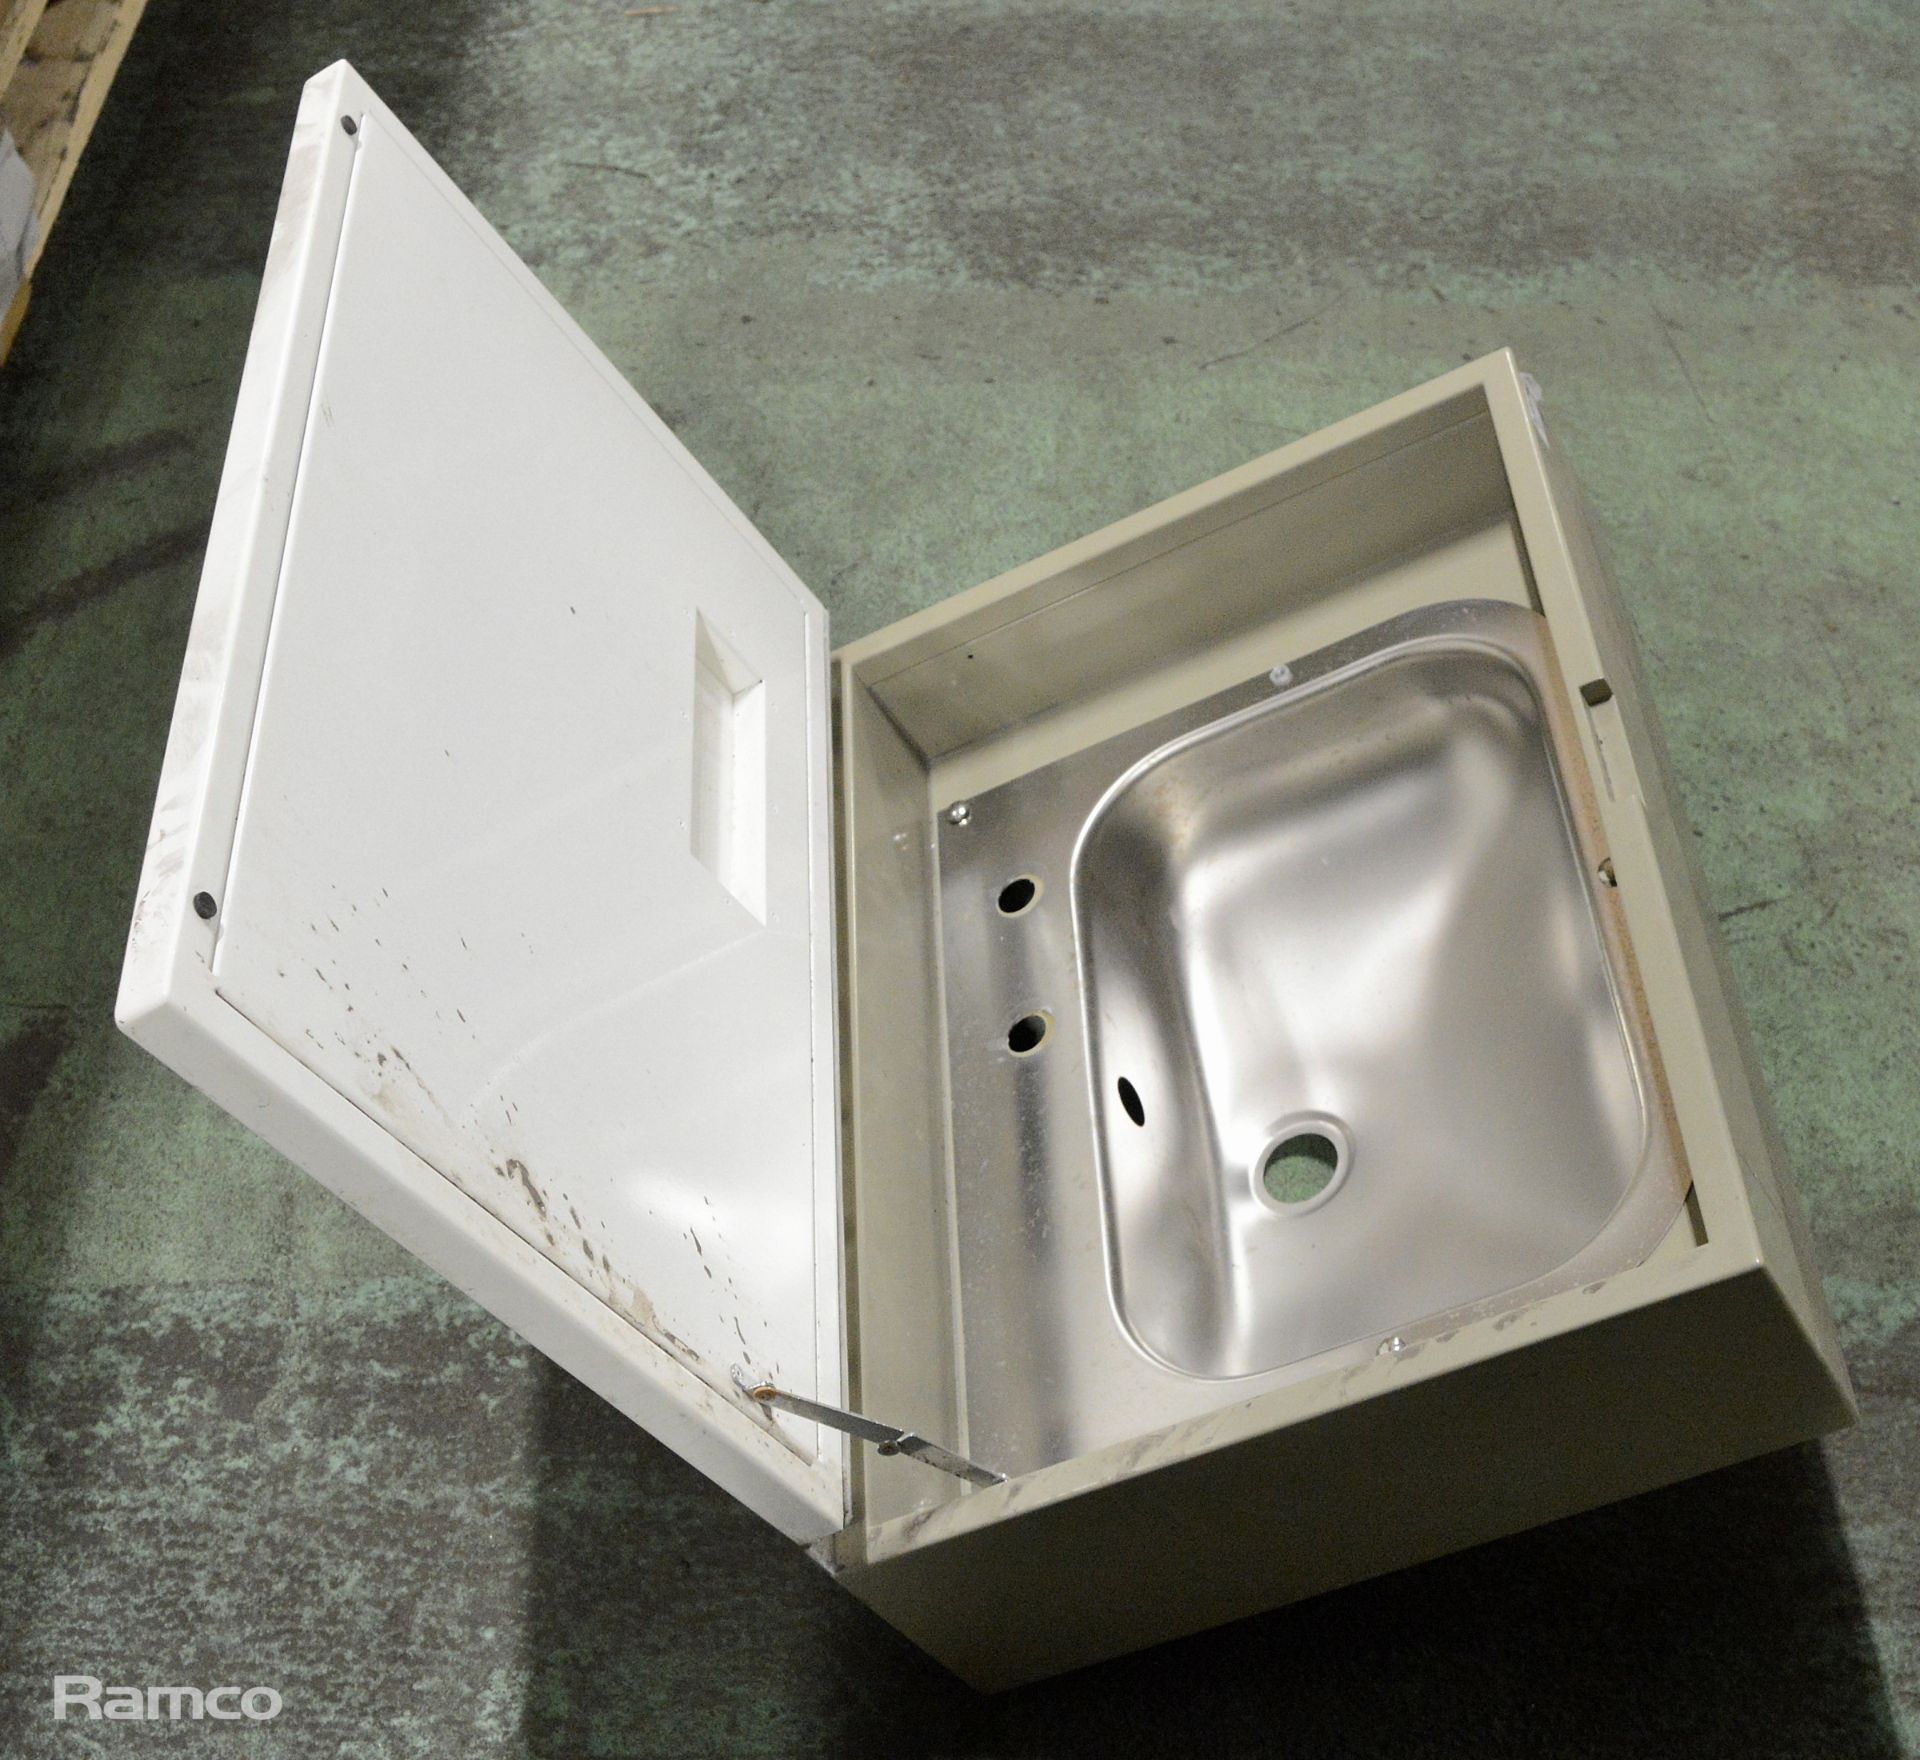 6x Wash basins L60 x W43 x H22 cm - Image 4 of 5